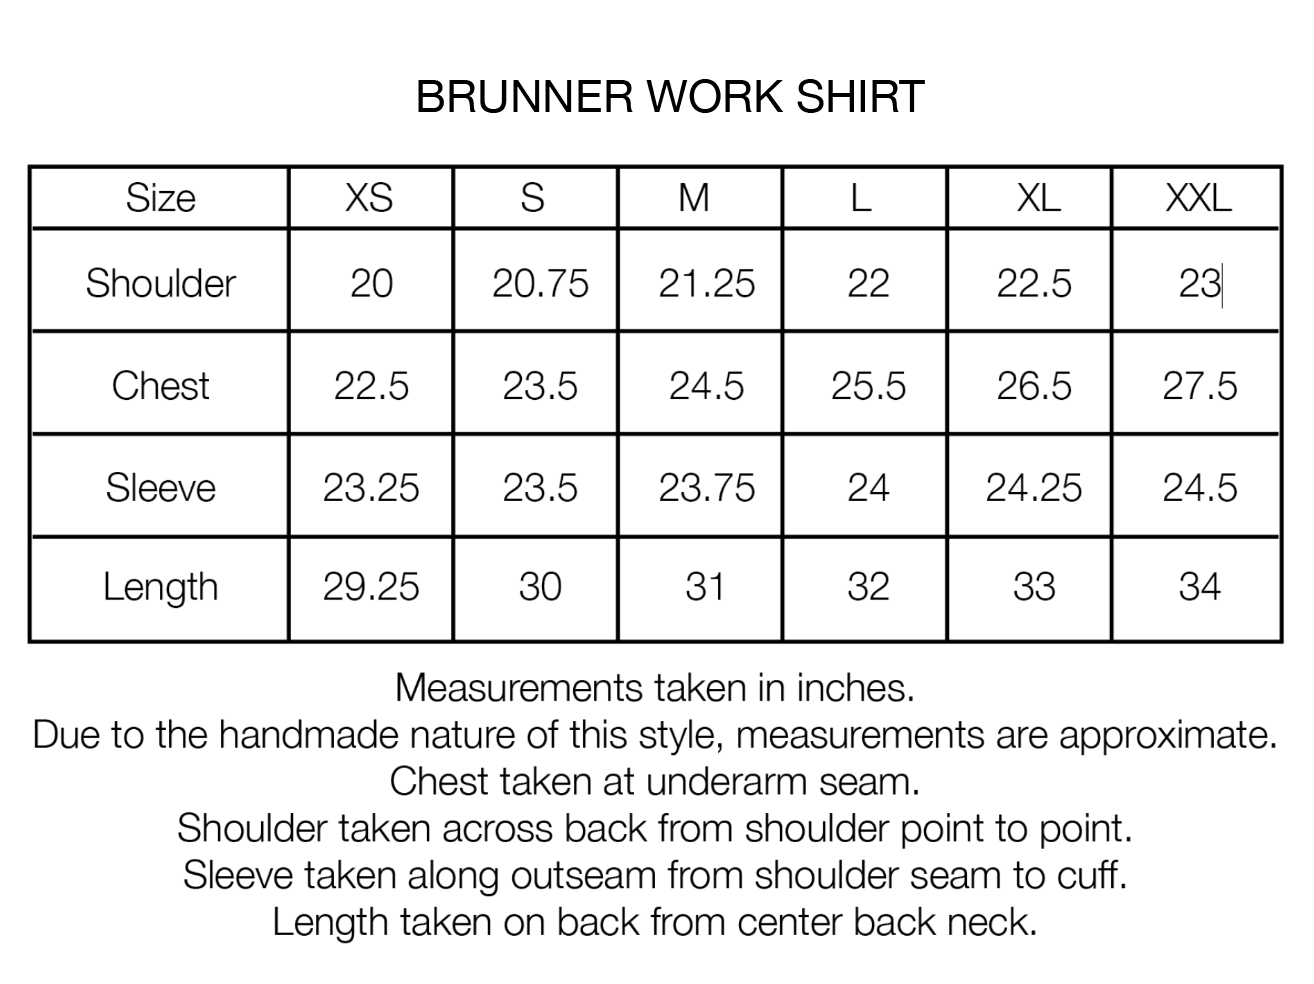 BRUNNER WORK SHIRT - BROWN / ECRU / INDIGO PLAID BRUSHED TWILL